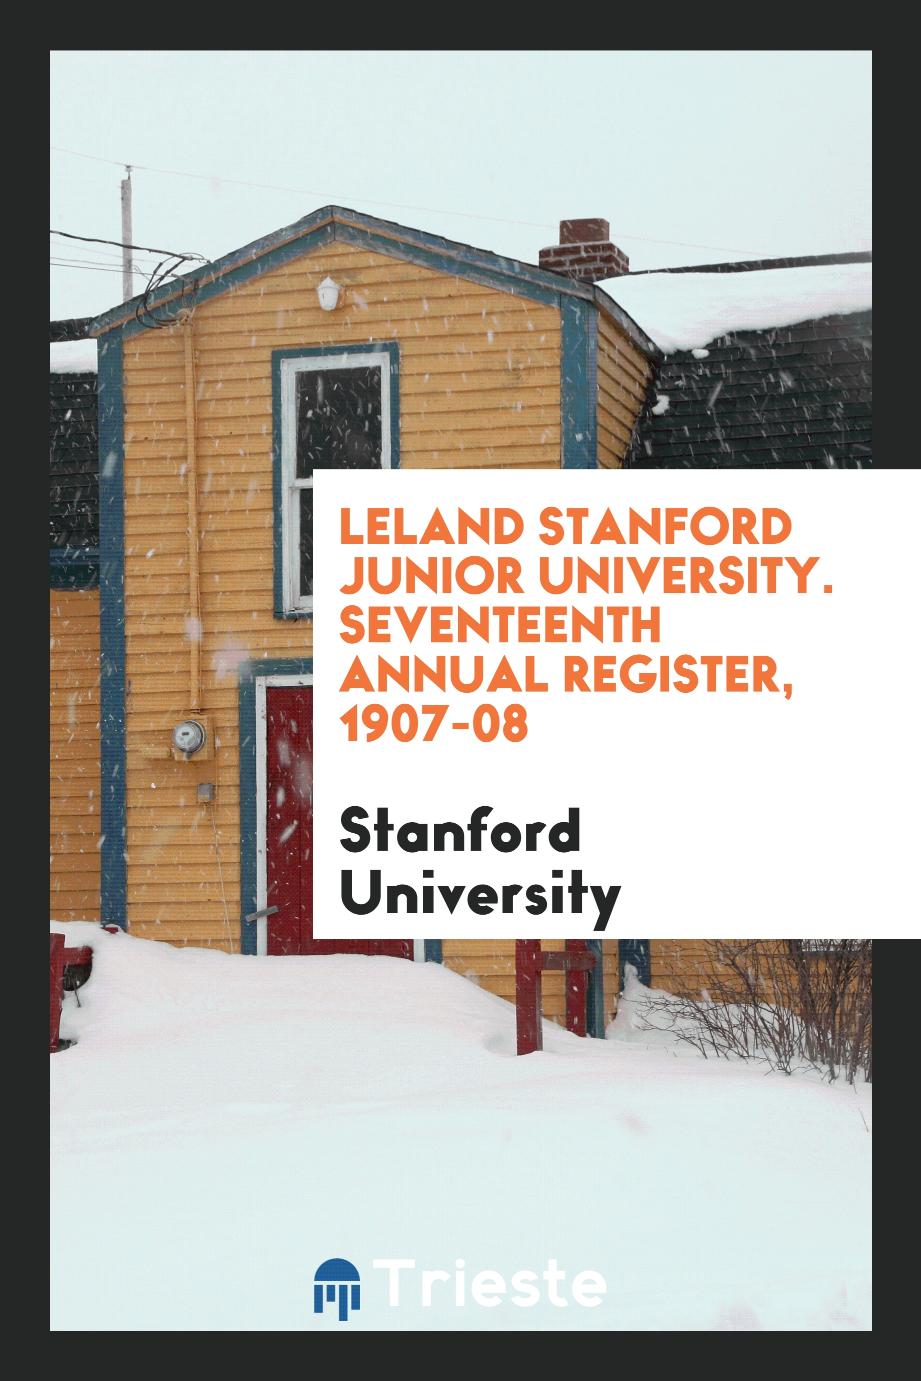 Leland Stanford Junior University. Seventeenth Annual Register, 1907-08